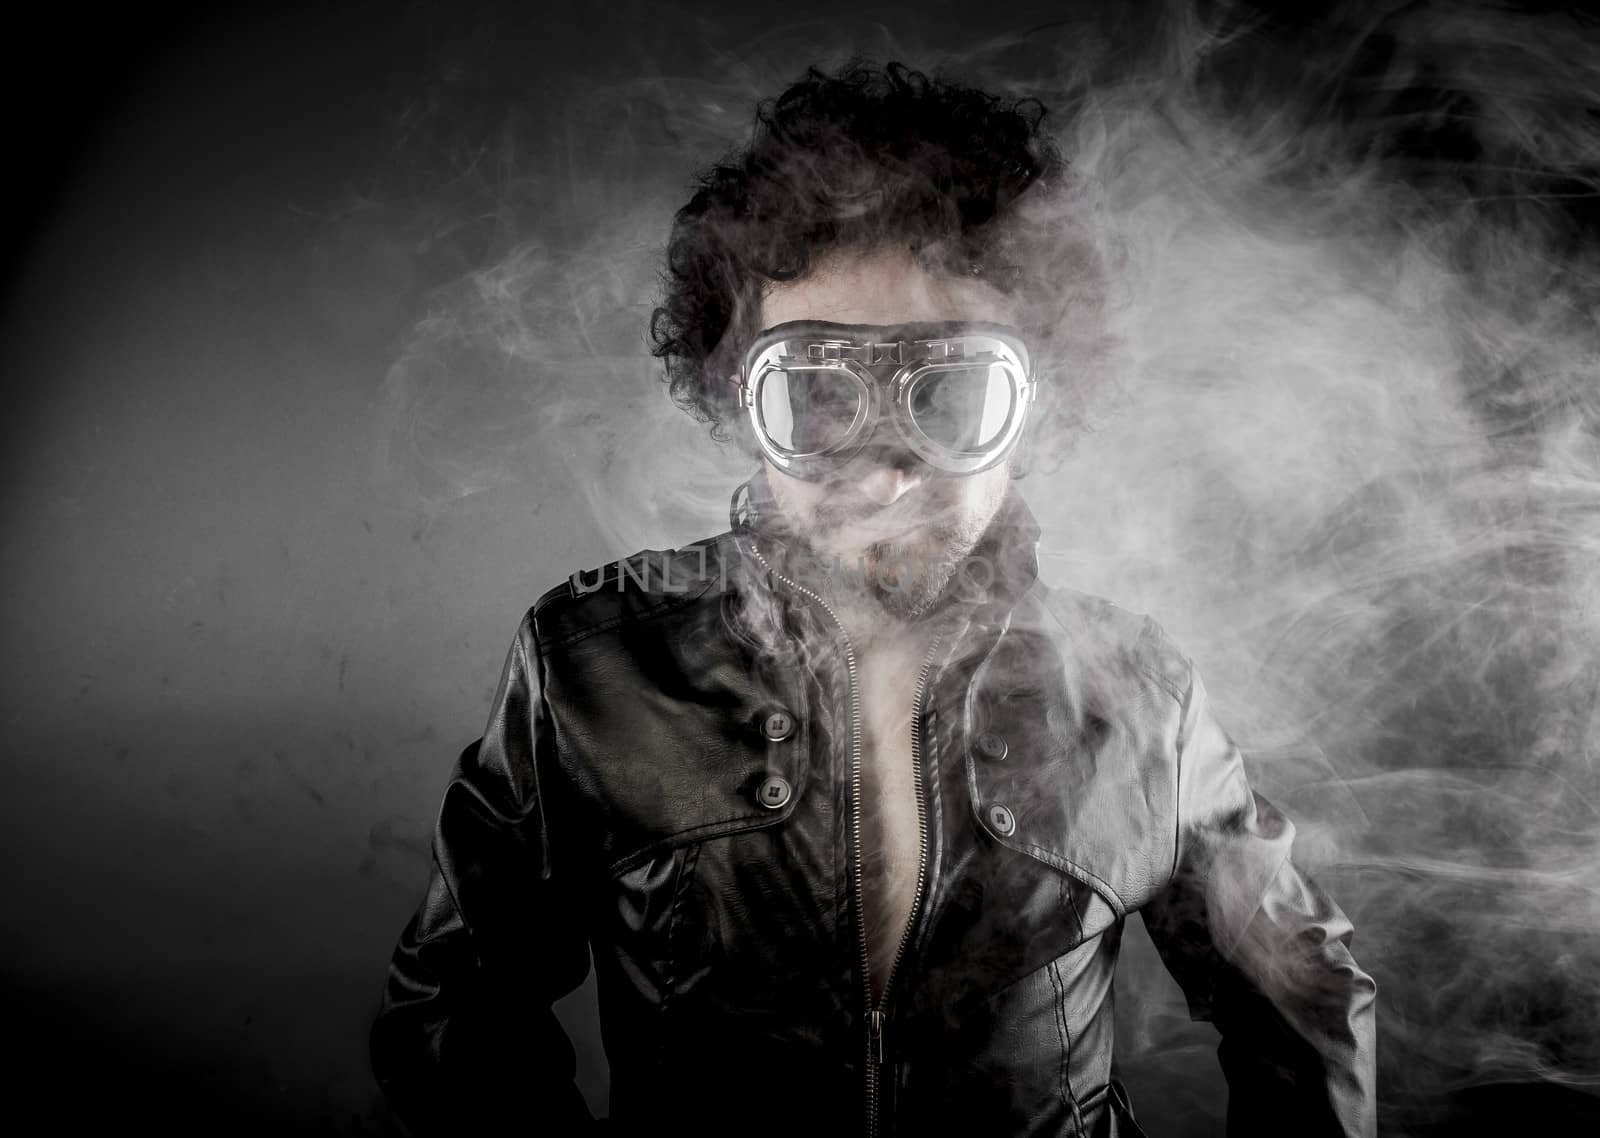 Motorcyclist, biker with sunglasses era dressed Leather jacket, huge smoke over dark background